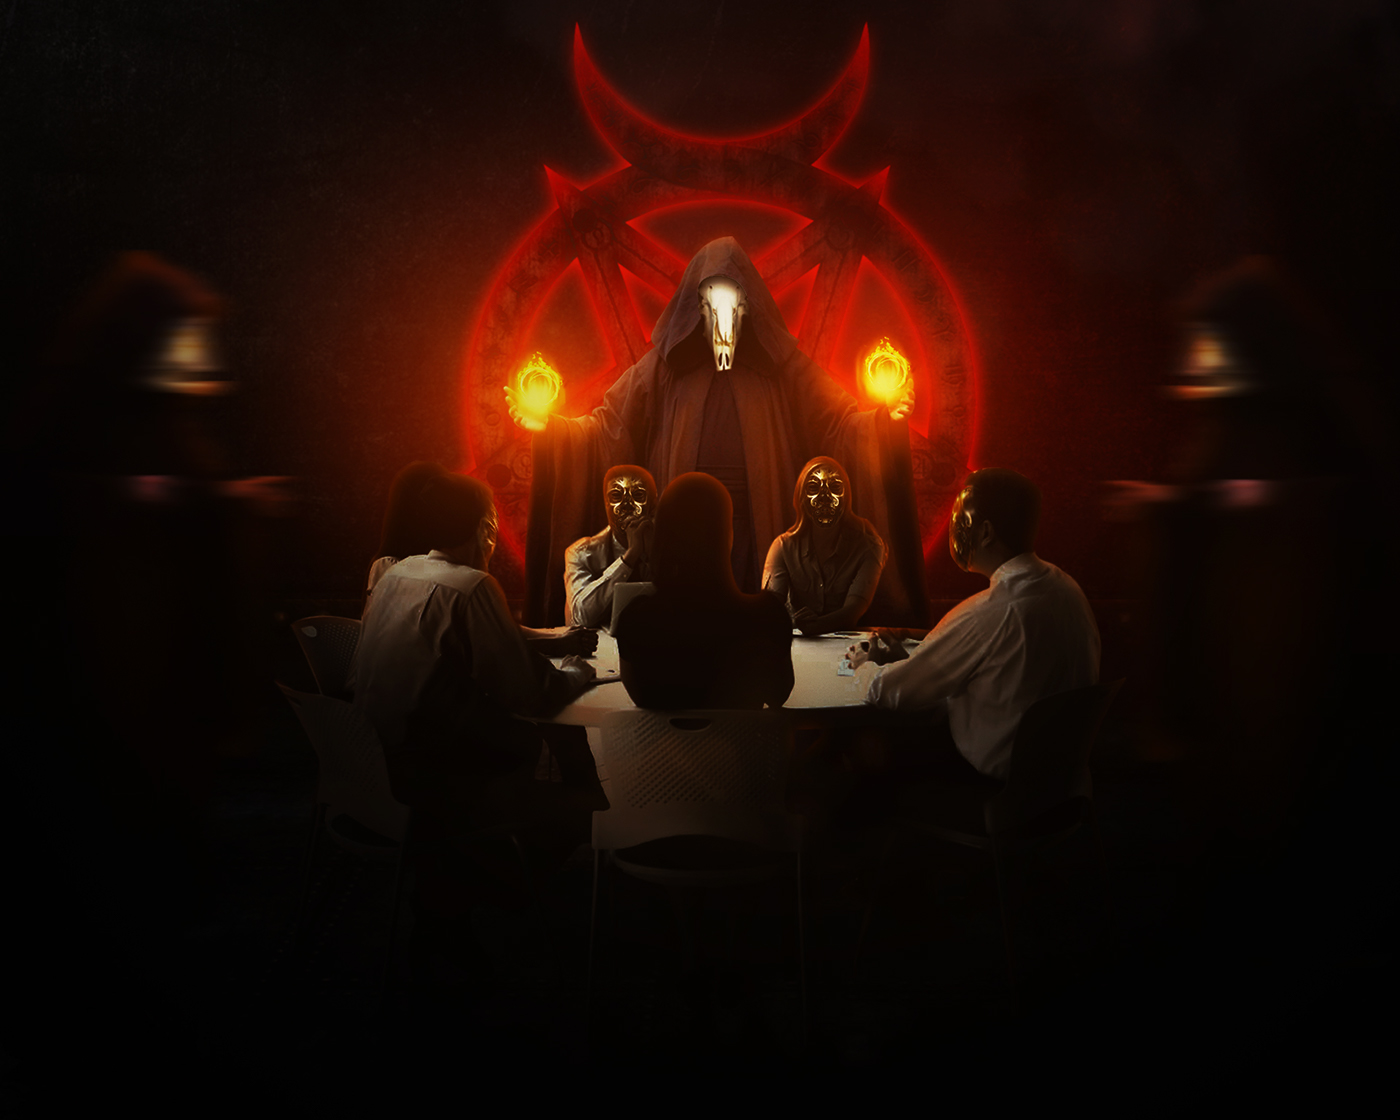 Satanist conspiracy demon great plot fire Magic   Masons photoshop manipulation darkness